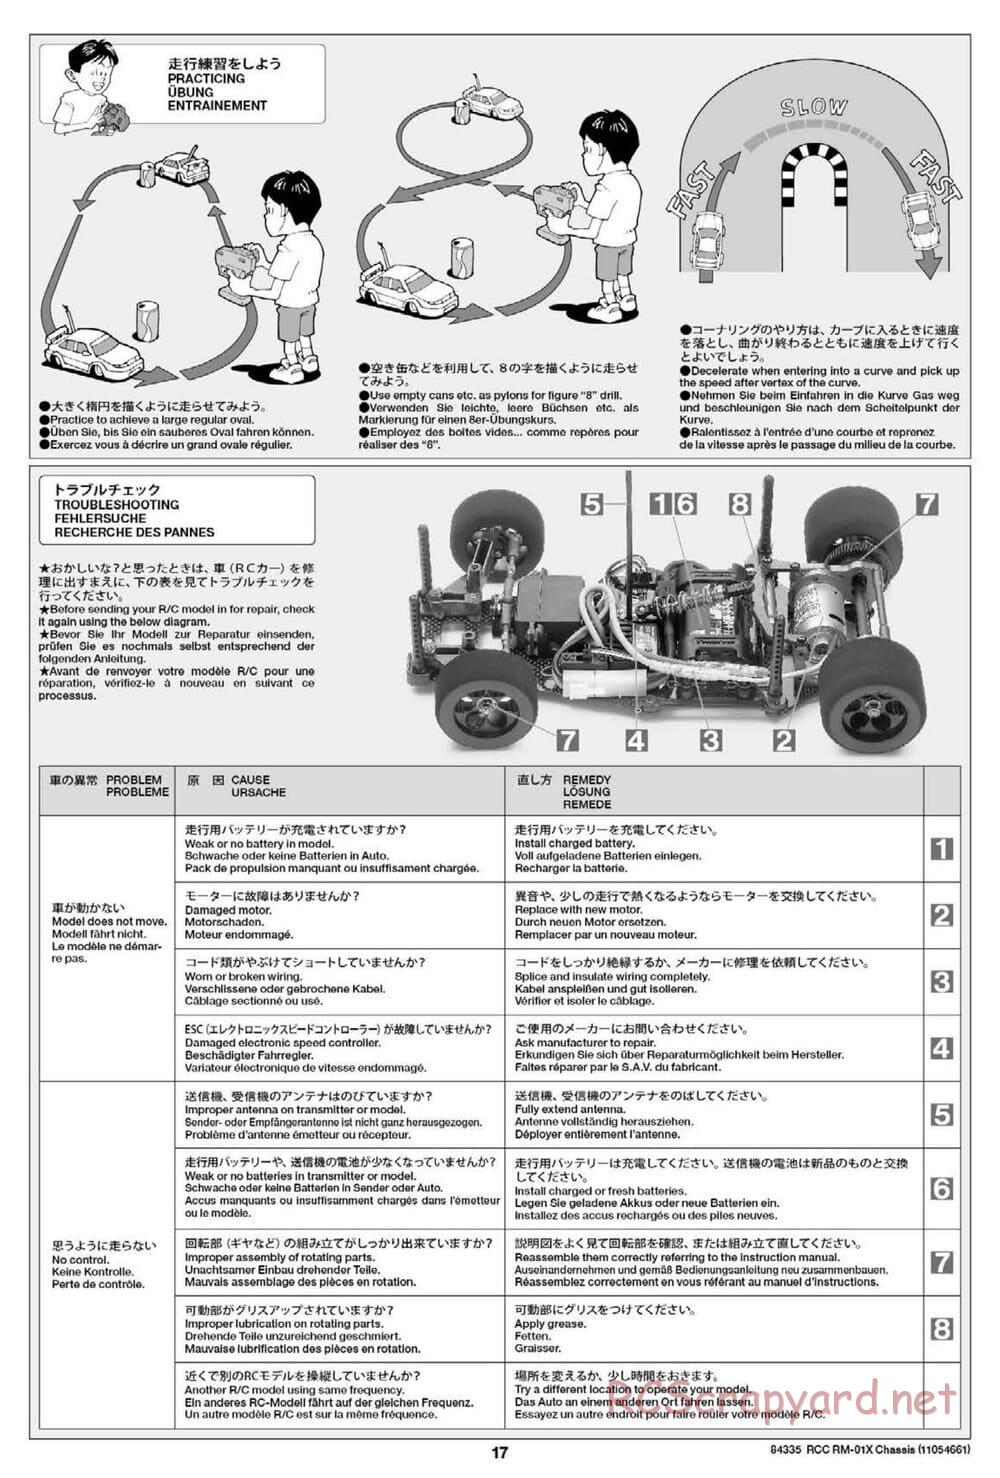 Tamiya - RM-01X Chassis - Manual - Page 17